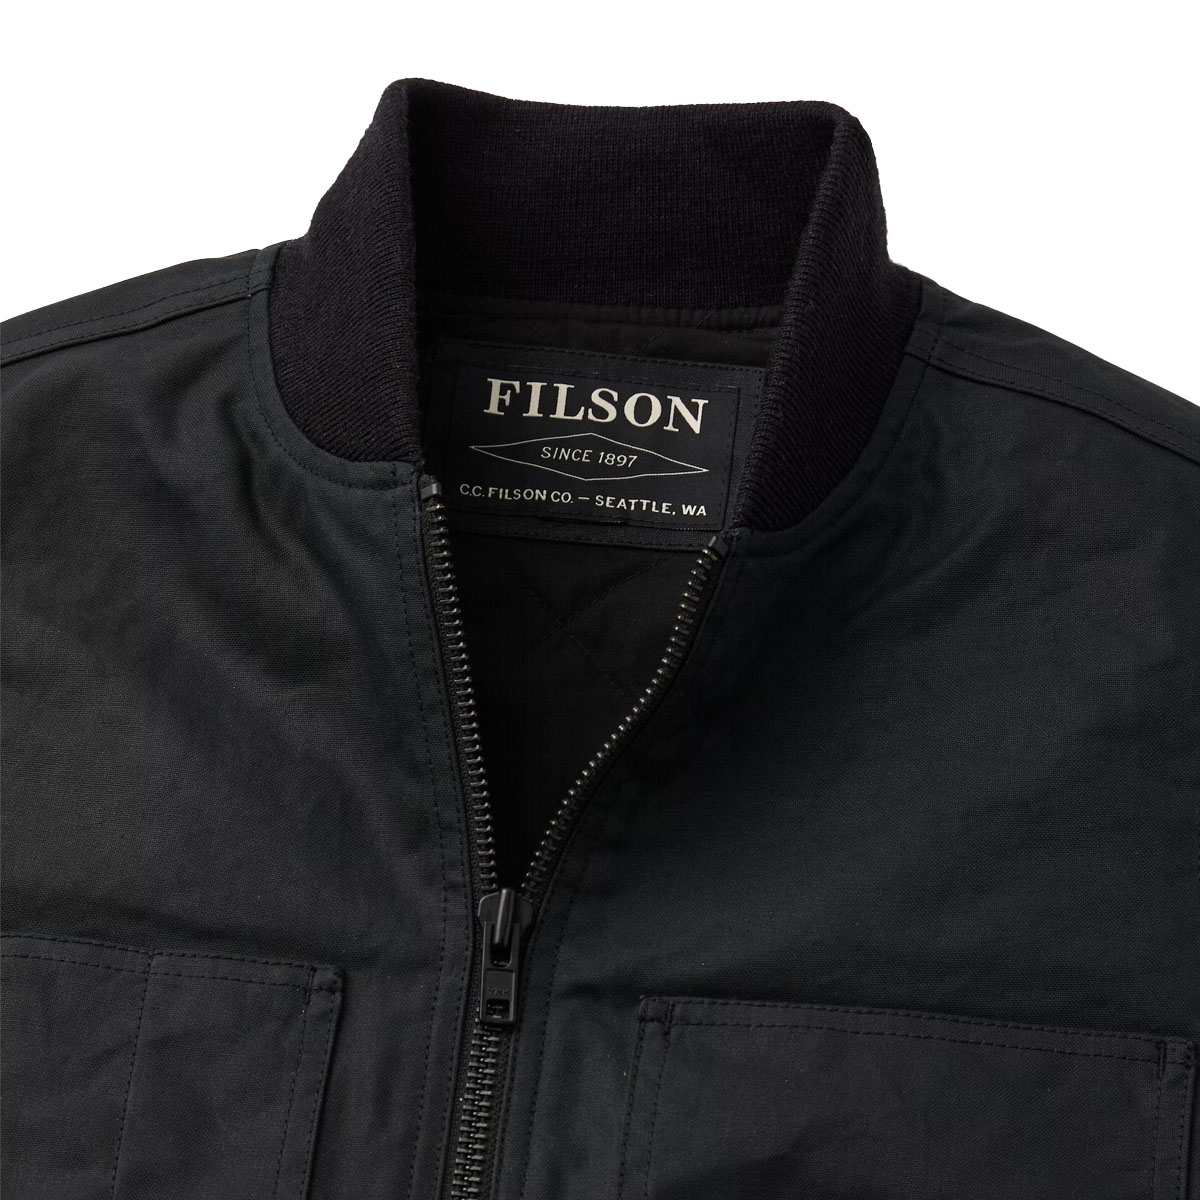 Filson Tin Cloth Insulated Work Vest Dark Tan, tough work vest